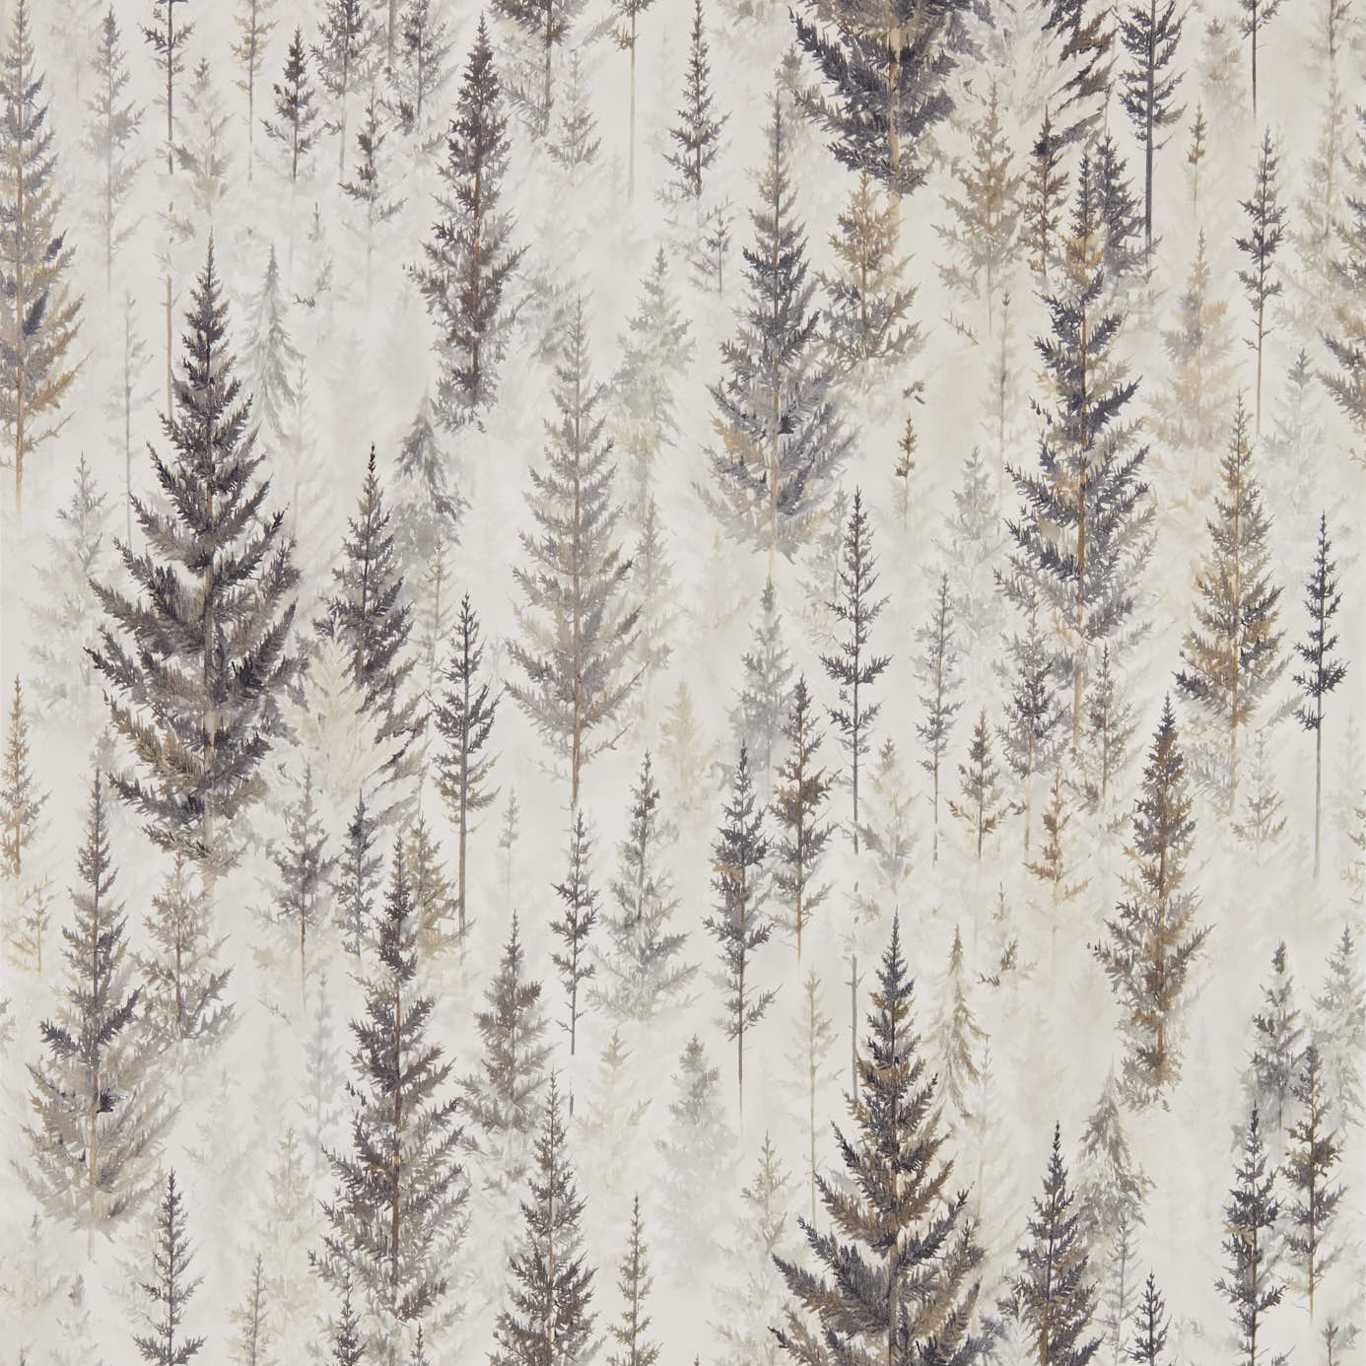 Juniper Pine Elder Bark Wallpaper DYSI216621 by Sanderson